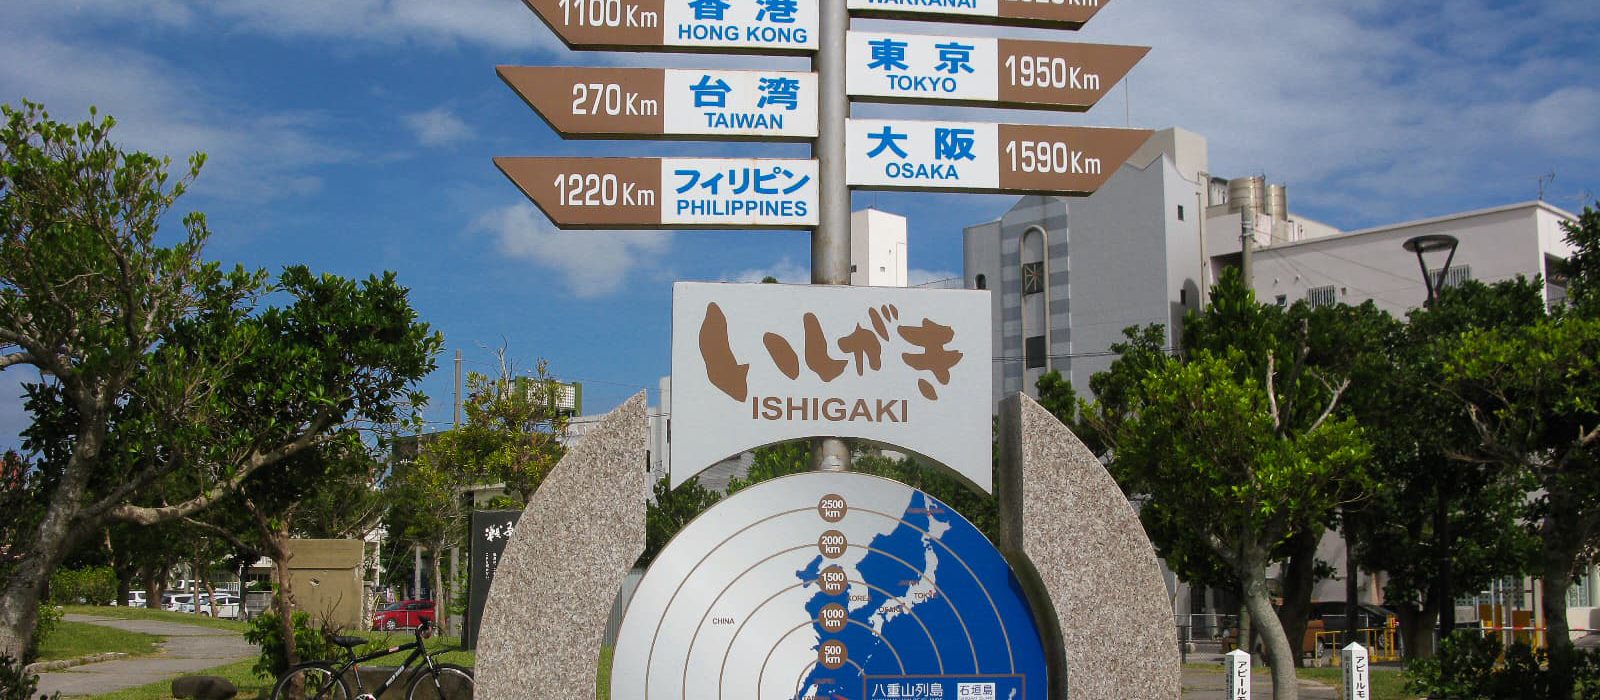 distance to ishigaki